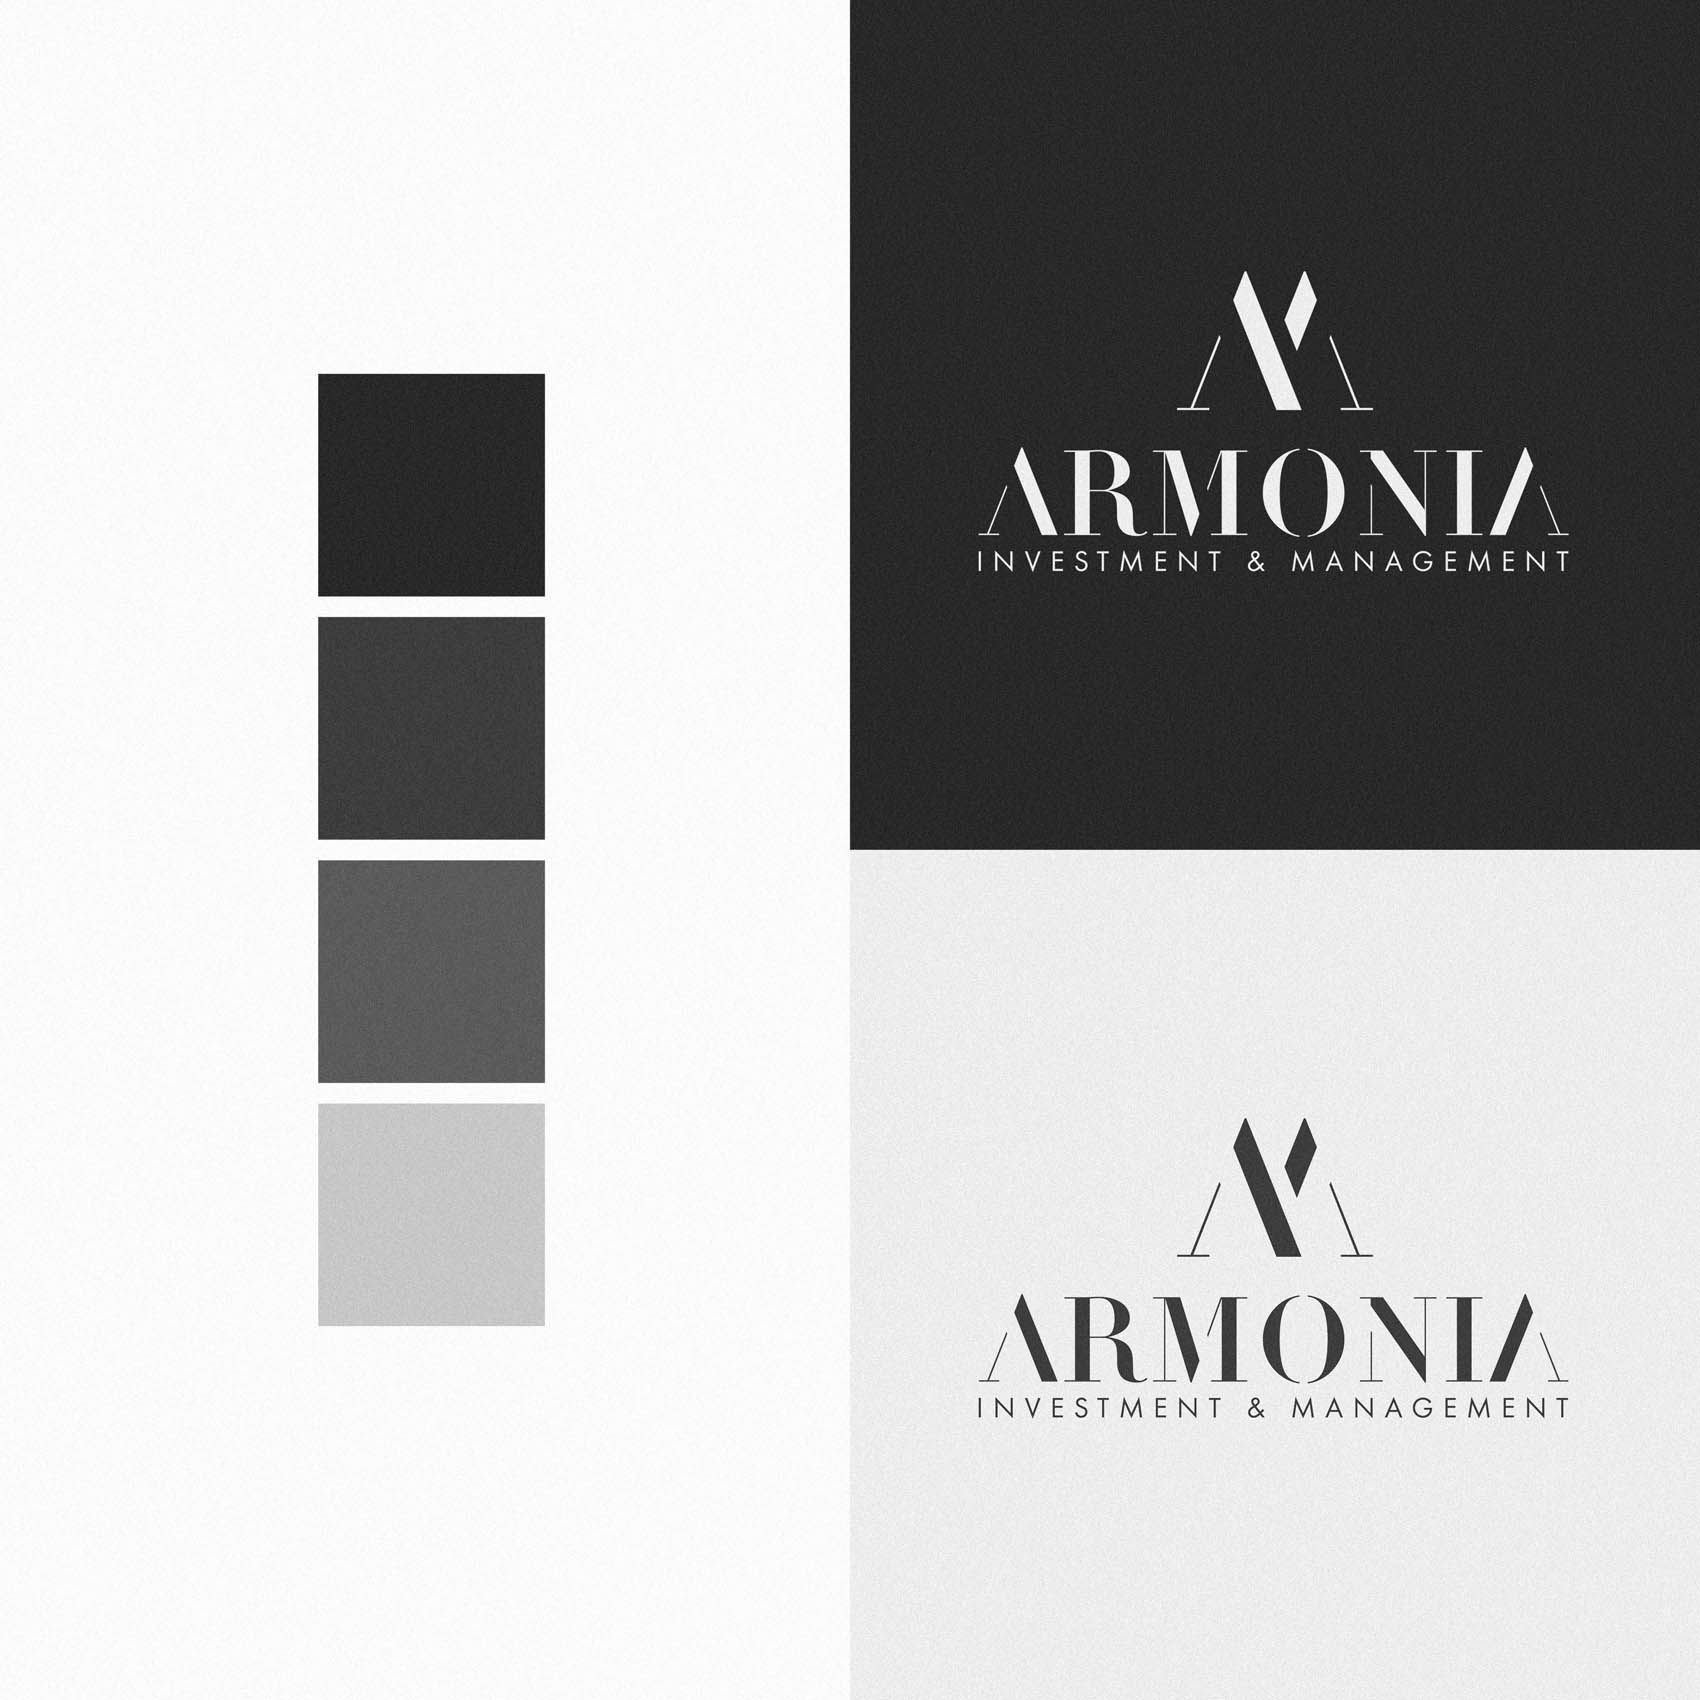 investment-firm-branding-identity-design-logo4